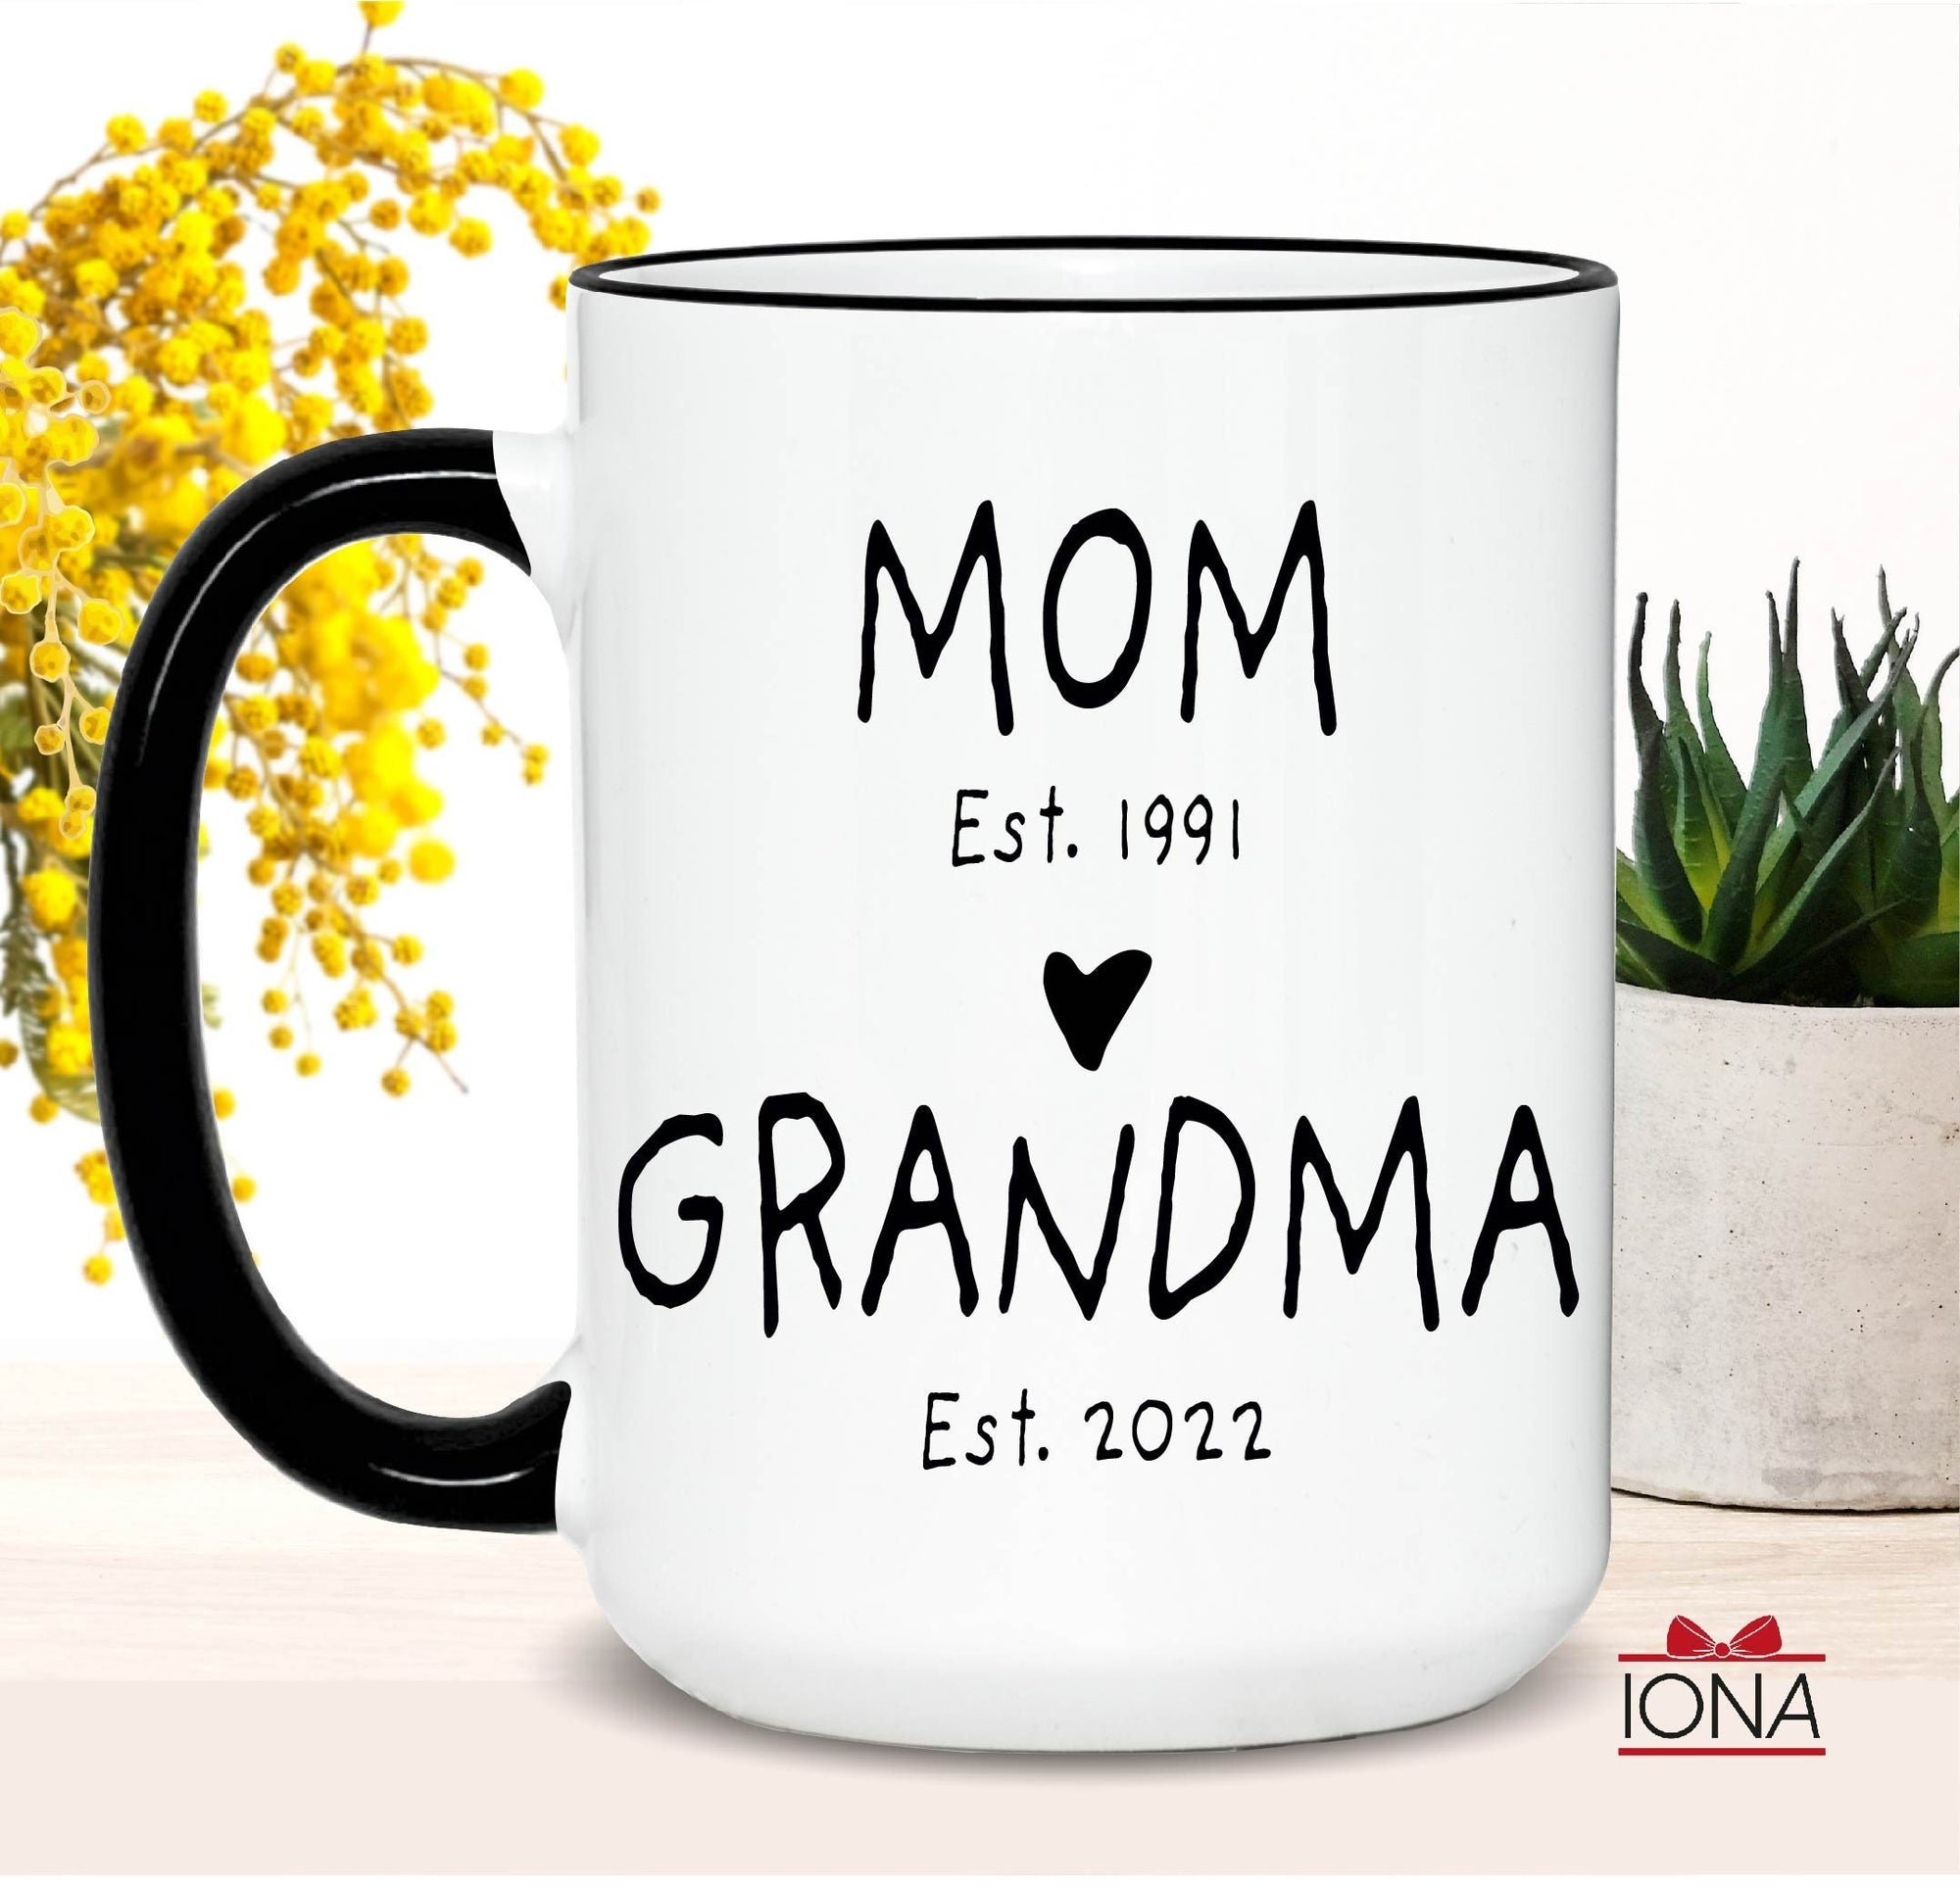 Mom to Grandma Coffee Mug, Fist Time Grandma, New Grandma Gift, Future Grandma Mug, First Grandma Gift, Pregnancy Announcement, Nana Gift